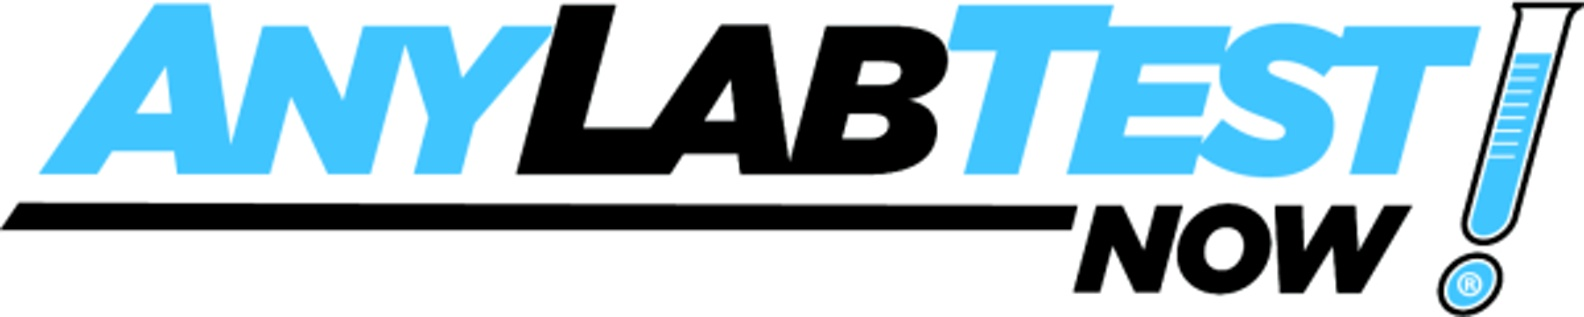 Any Lab Test Now - Avon Logo